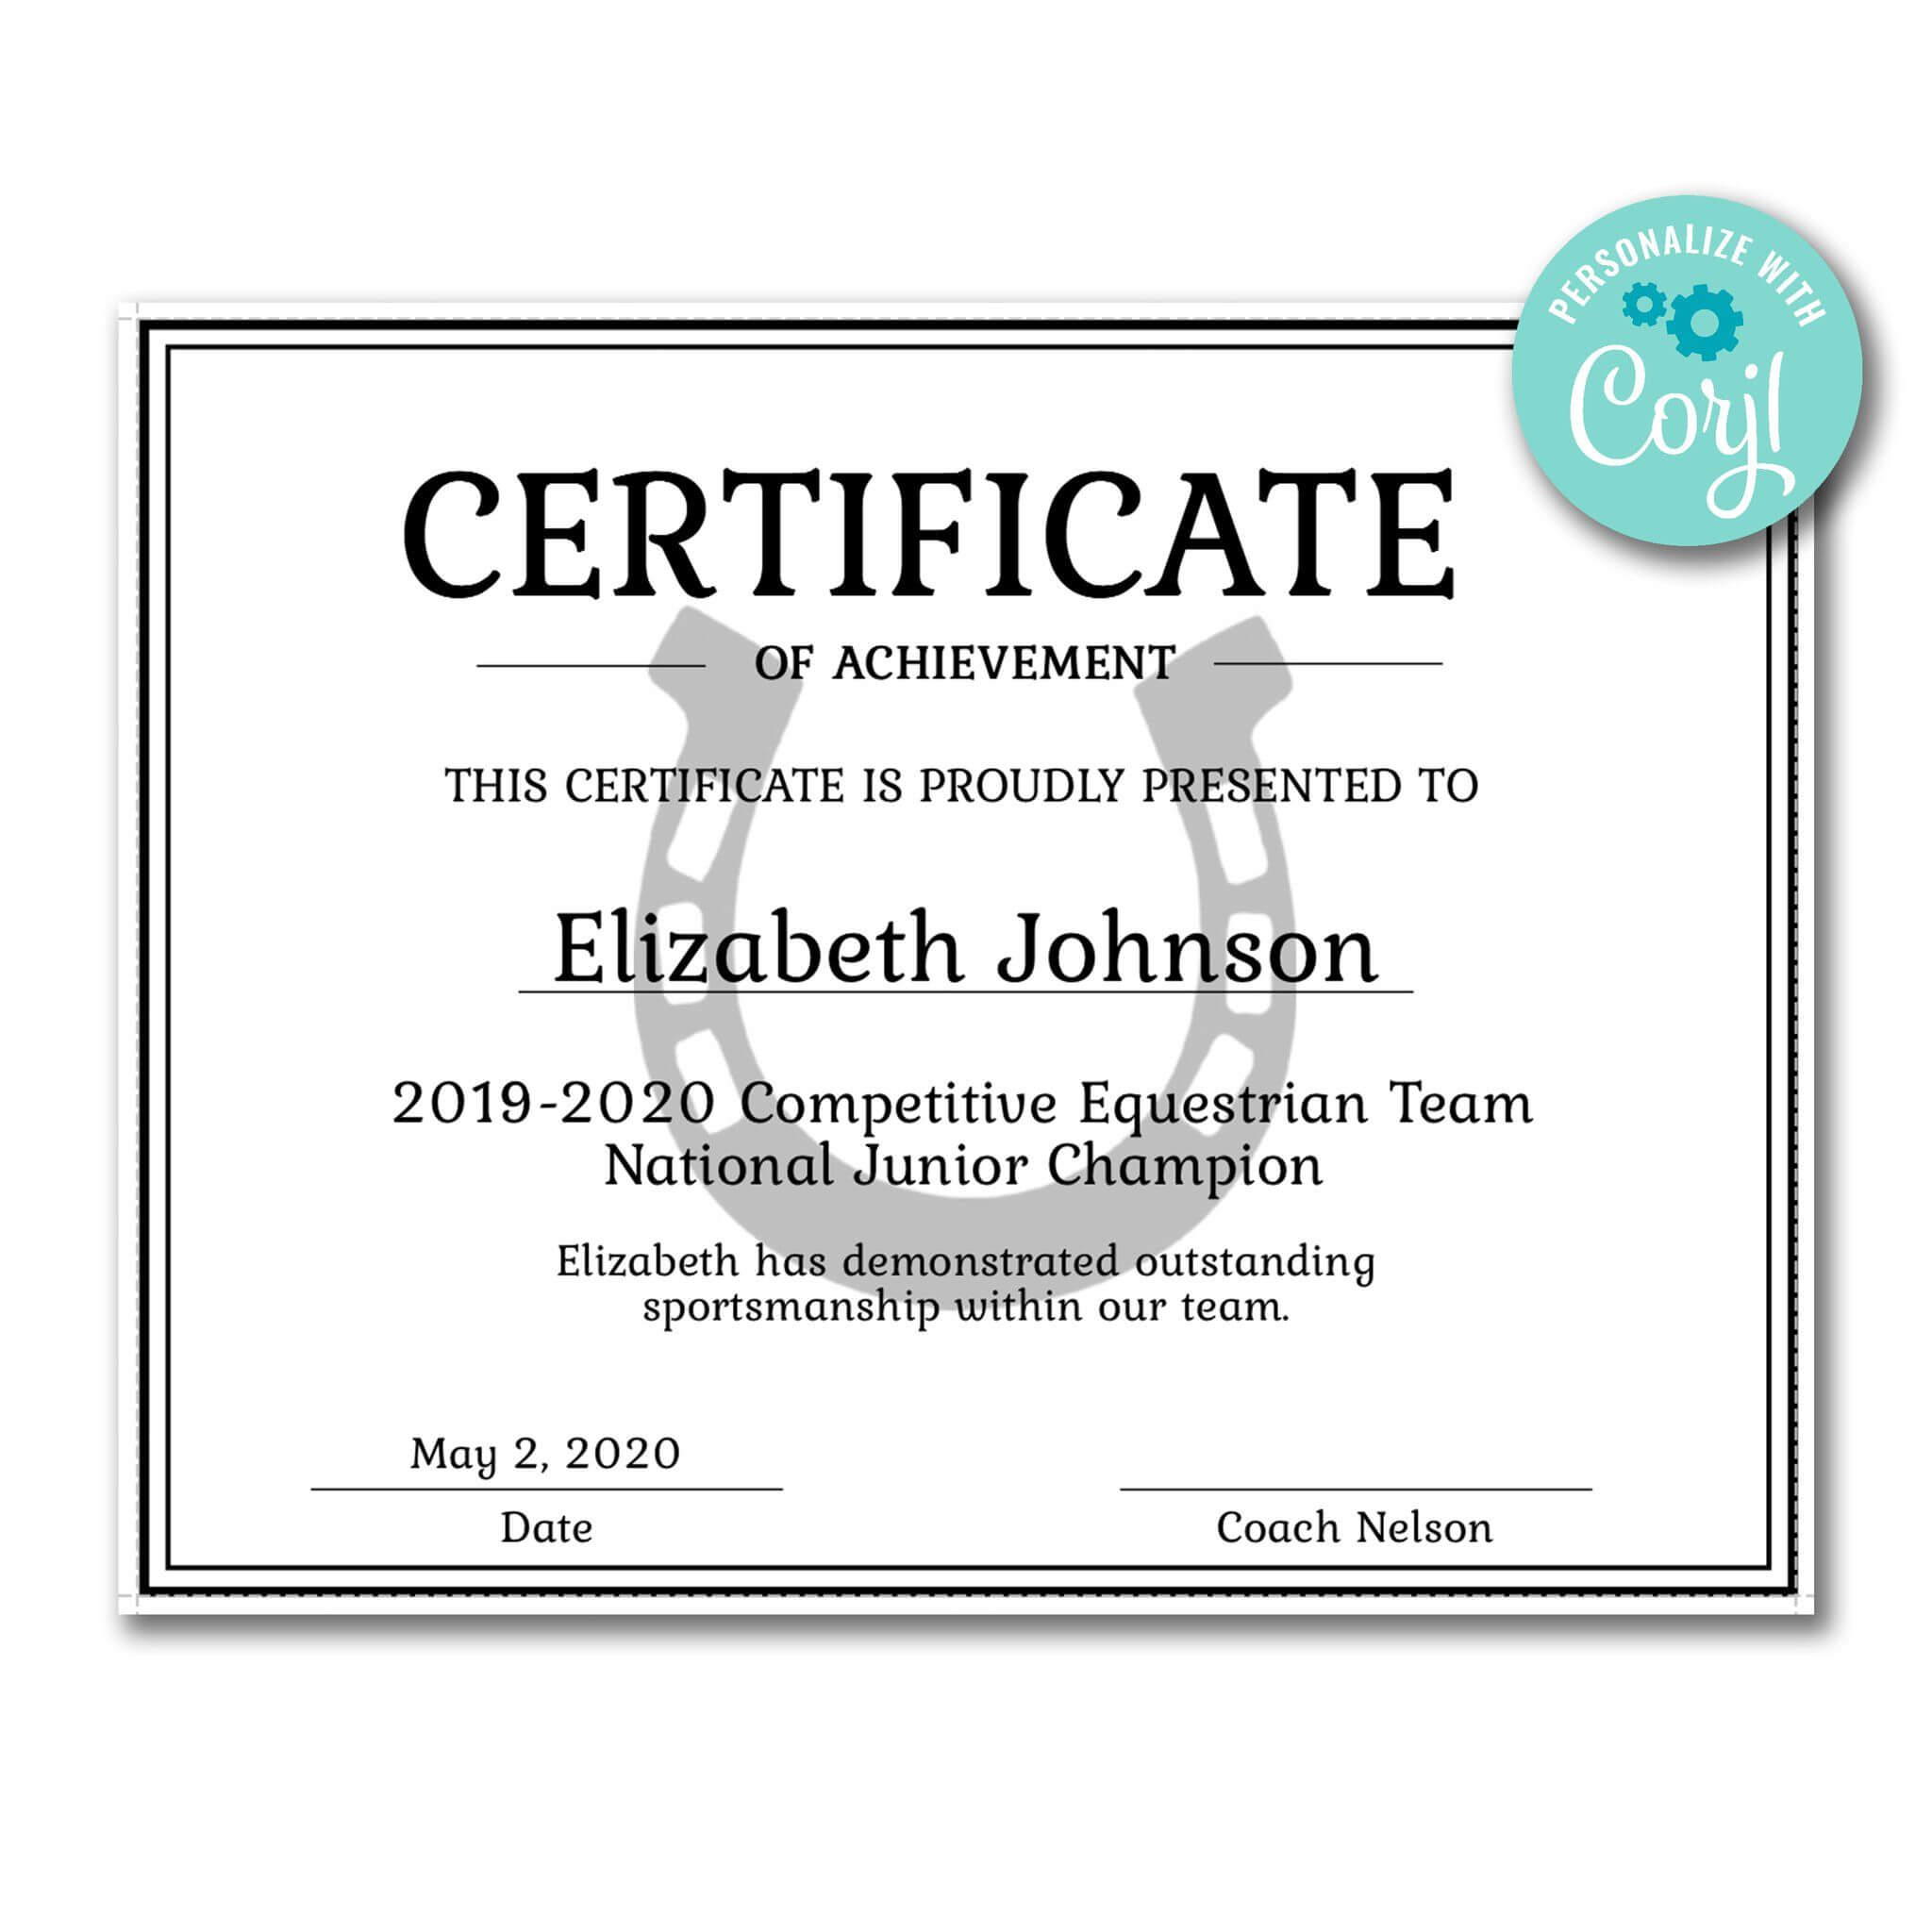 Horseshoe Certificate | Certificate Templates, Certificate With Free Softball Certificate Templates